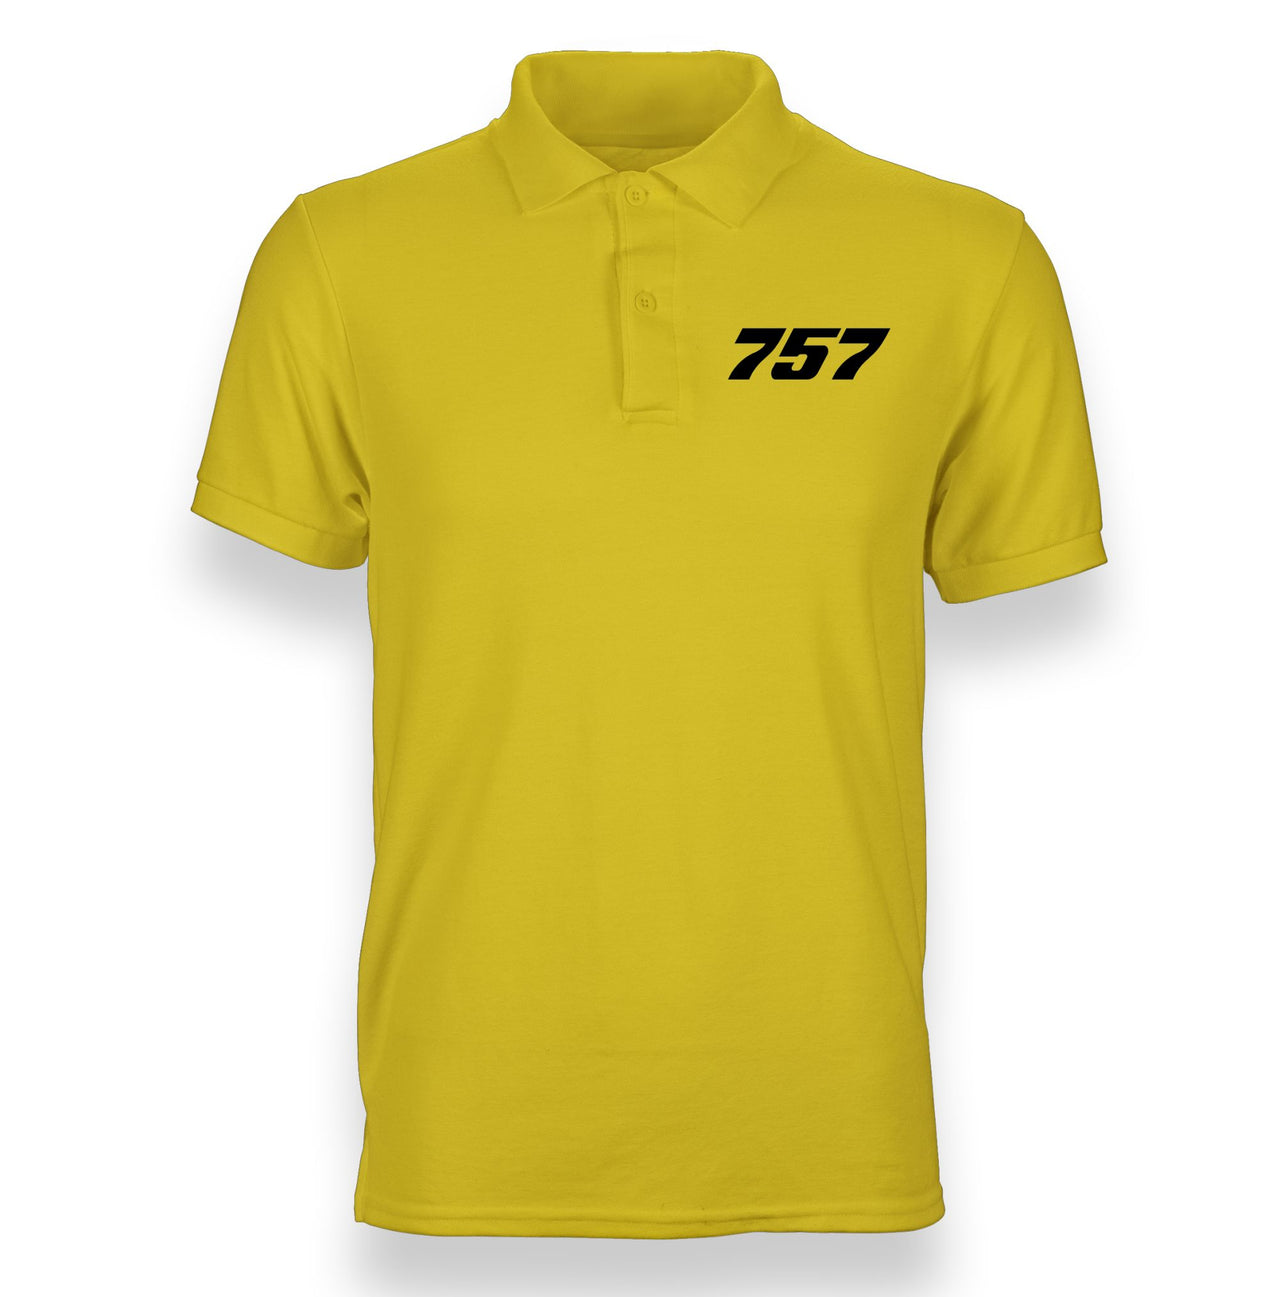 757 Flat Text Designed "WOMEN" Polo T-Shirts